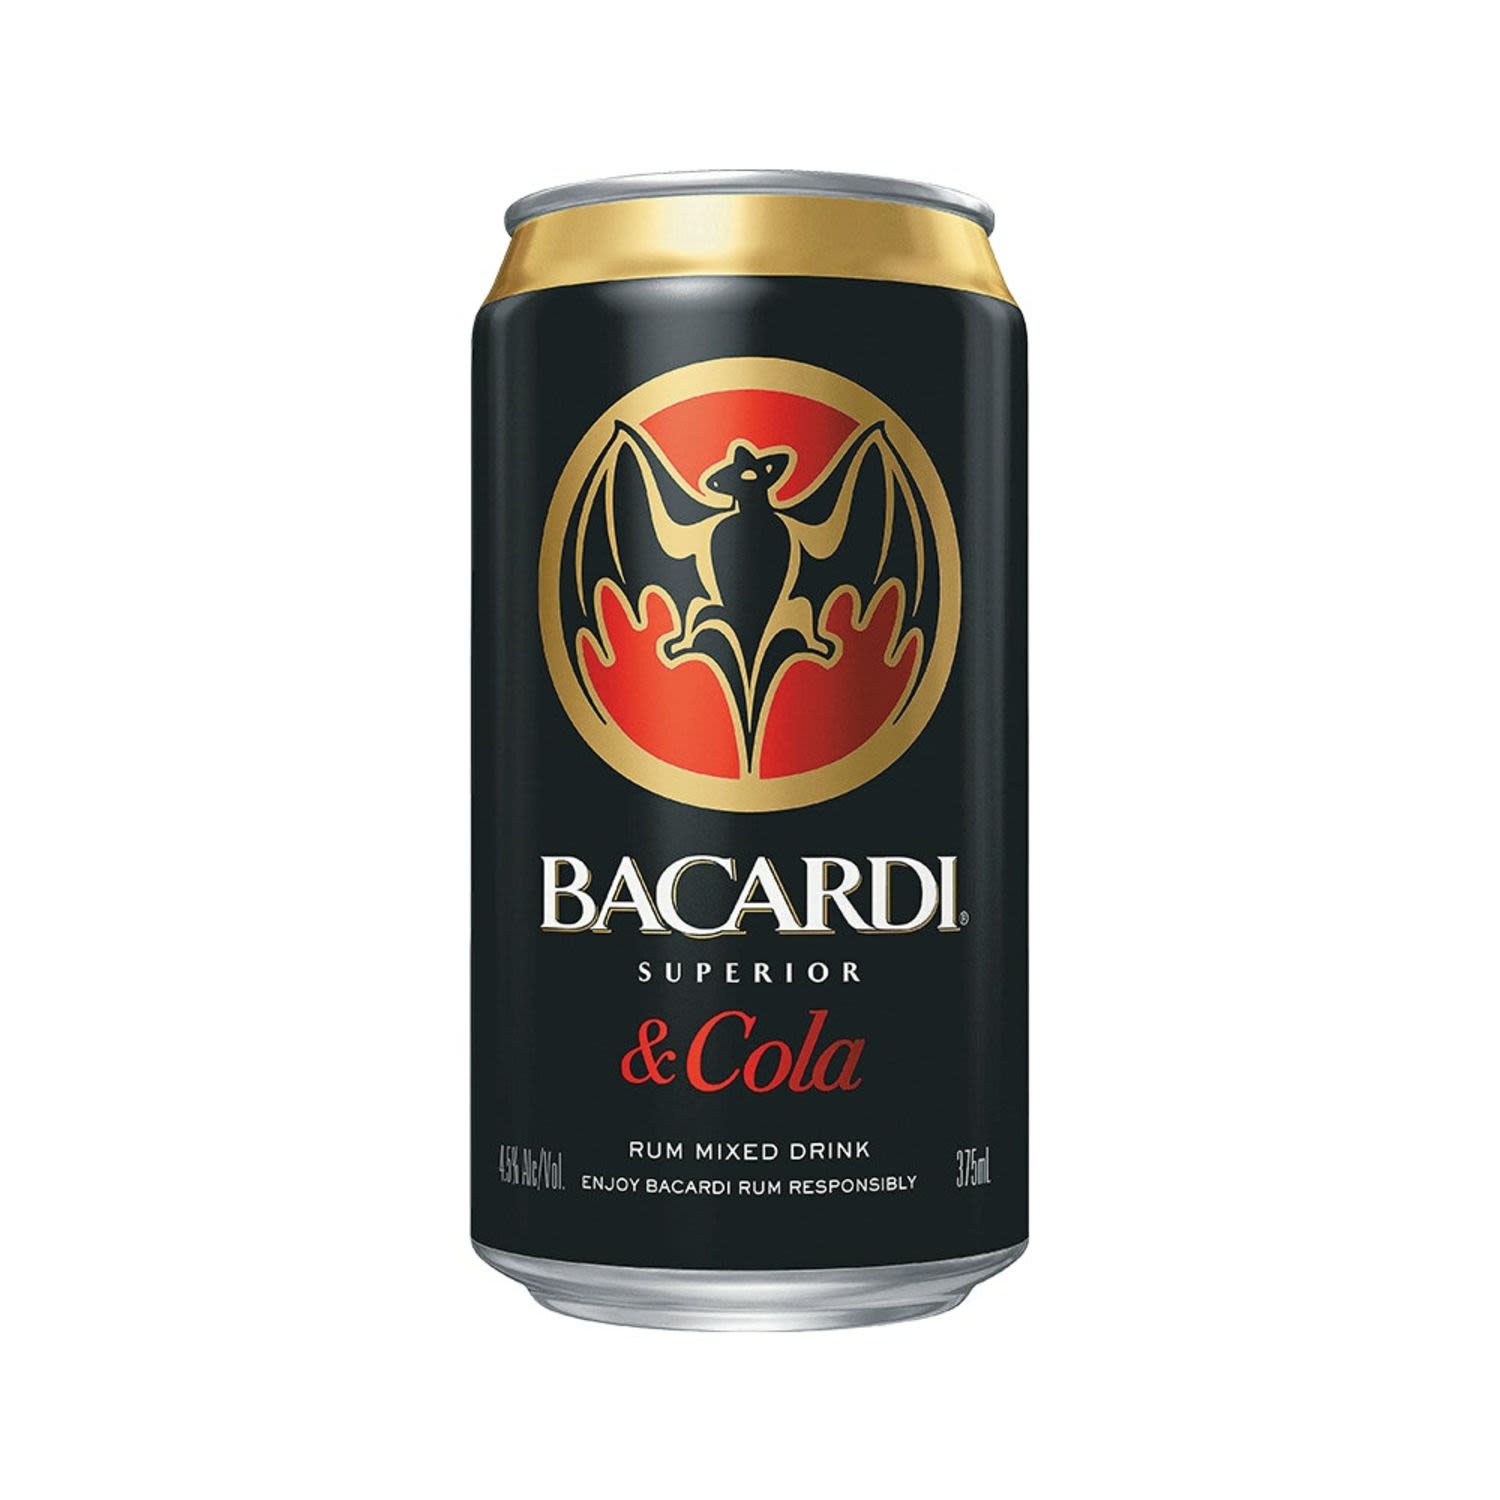 Bacardi Rum & Cola 375mL<br /> <br />Alcohol Volume: 4.50%<br /><br />Pack Format: Can<br /><br />Standard Drinks: 1.3</br /><br />Pack Type: Can<br />